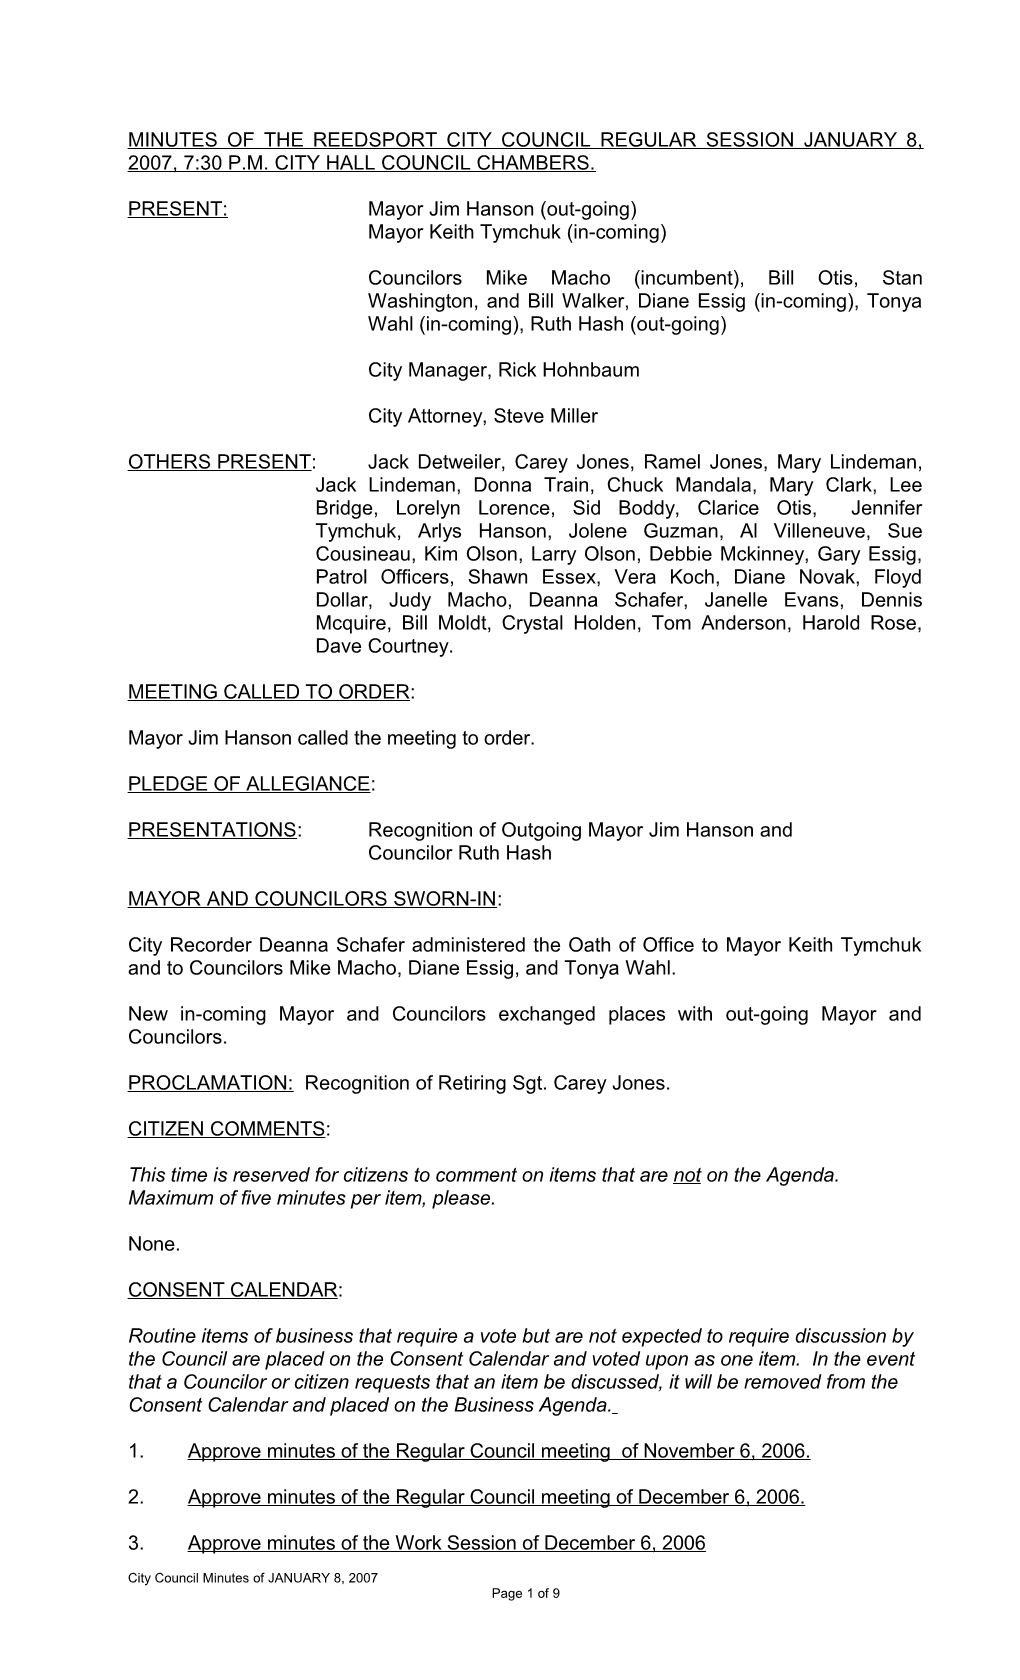 Minutes of the Reedsport City Council Regular Session April 5, 2004, 7:00 P